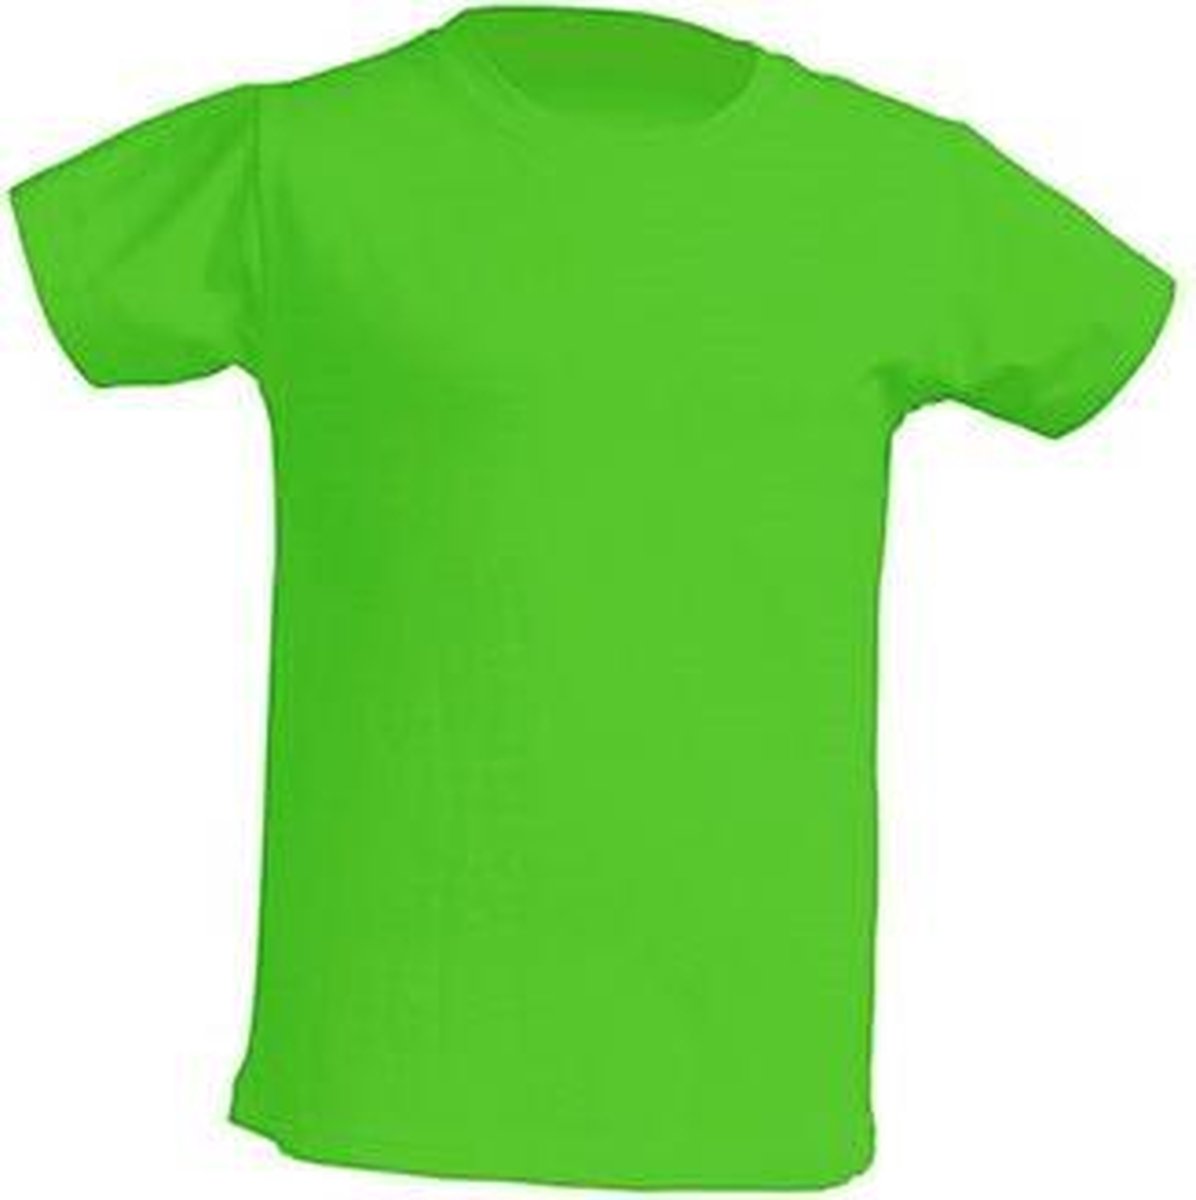 JHK Kinder t-shirt in lime maat 5-6 jaar (116) - set van 5 stuks